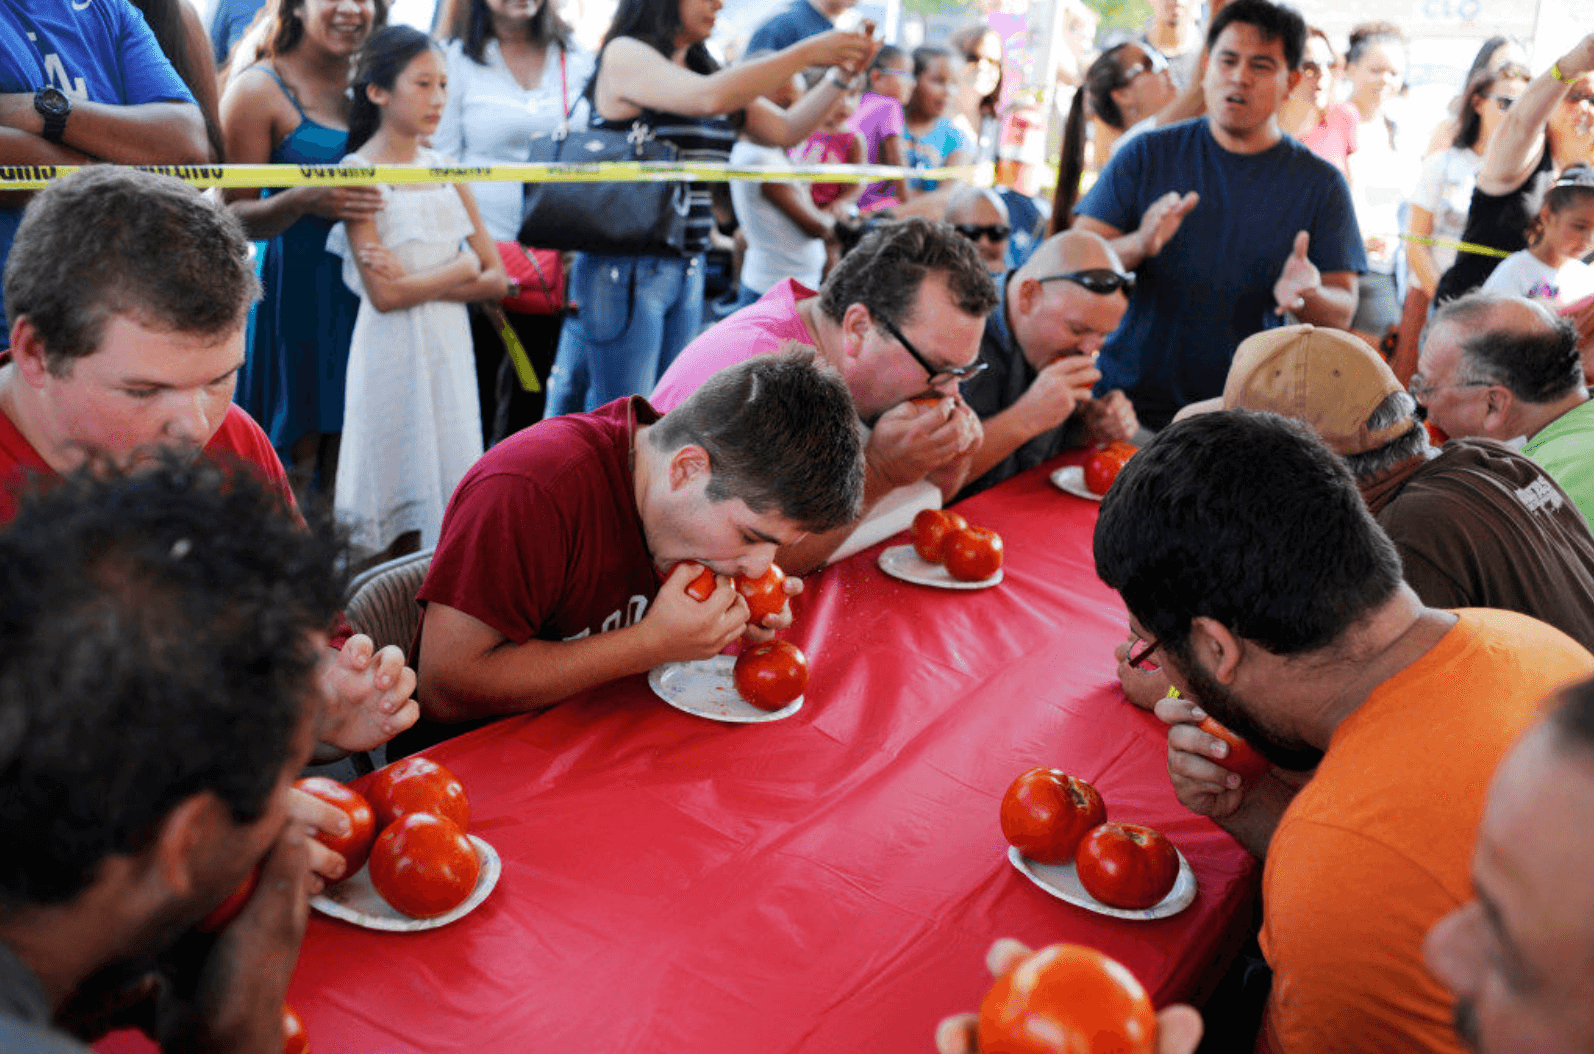 28th Annual Tomato & Vine Festival Returns Aug. 17-18